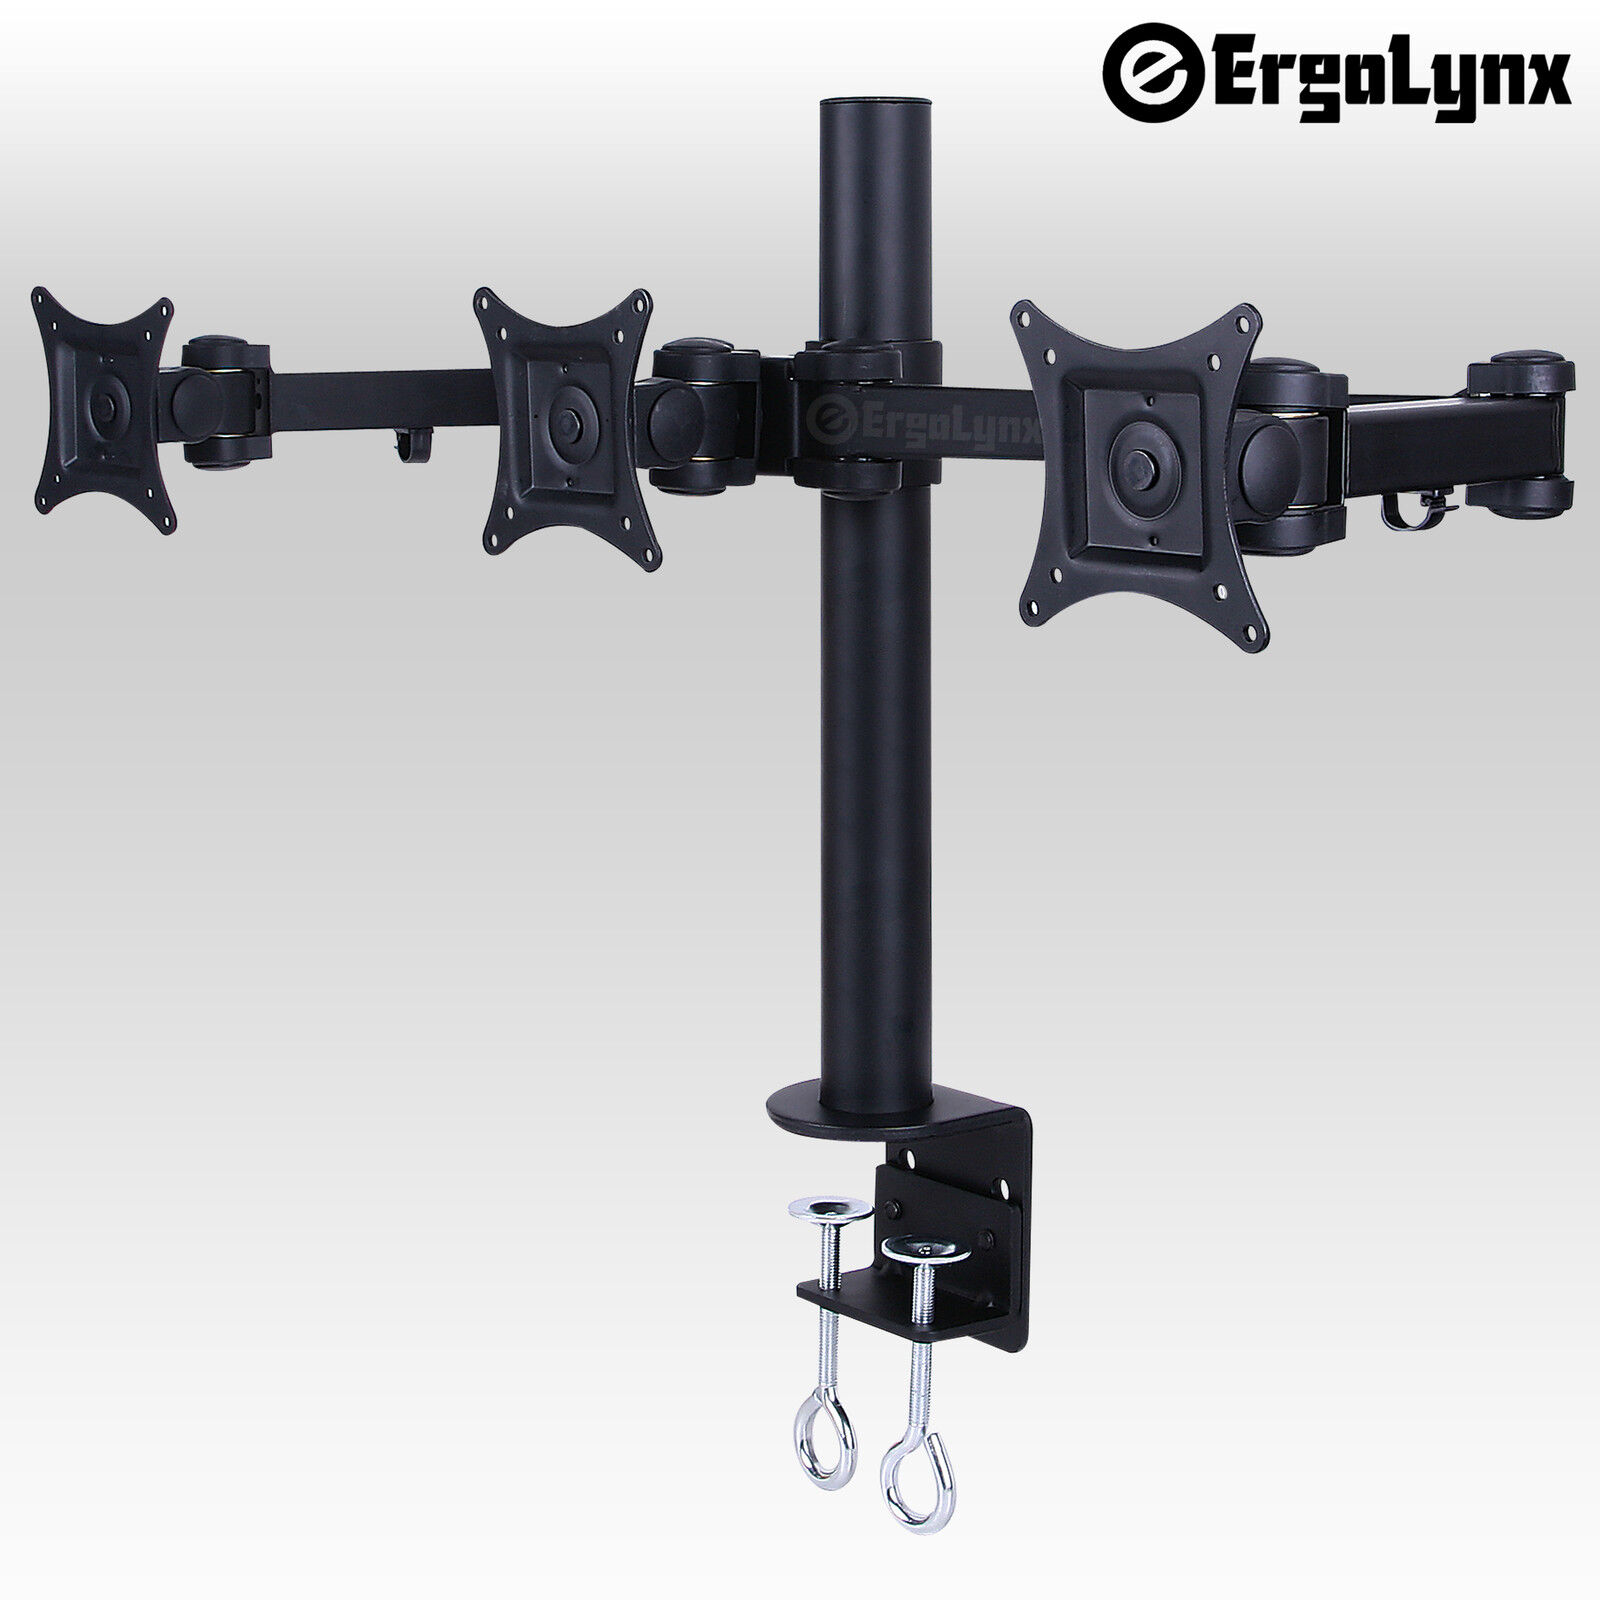 Ergolynx Triple VESA Monitor Arm Stand Desk Mount LCD LED Display 3 24" Screens